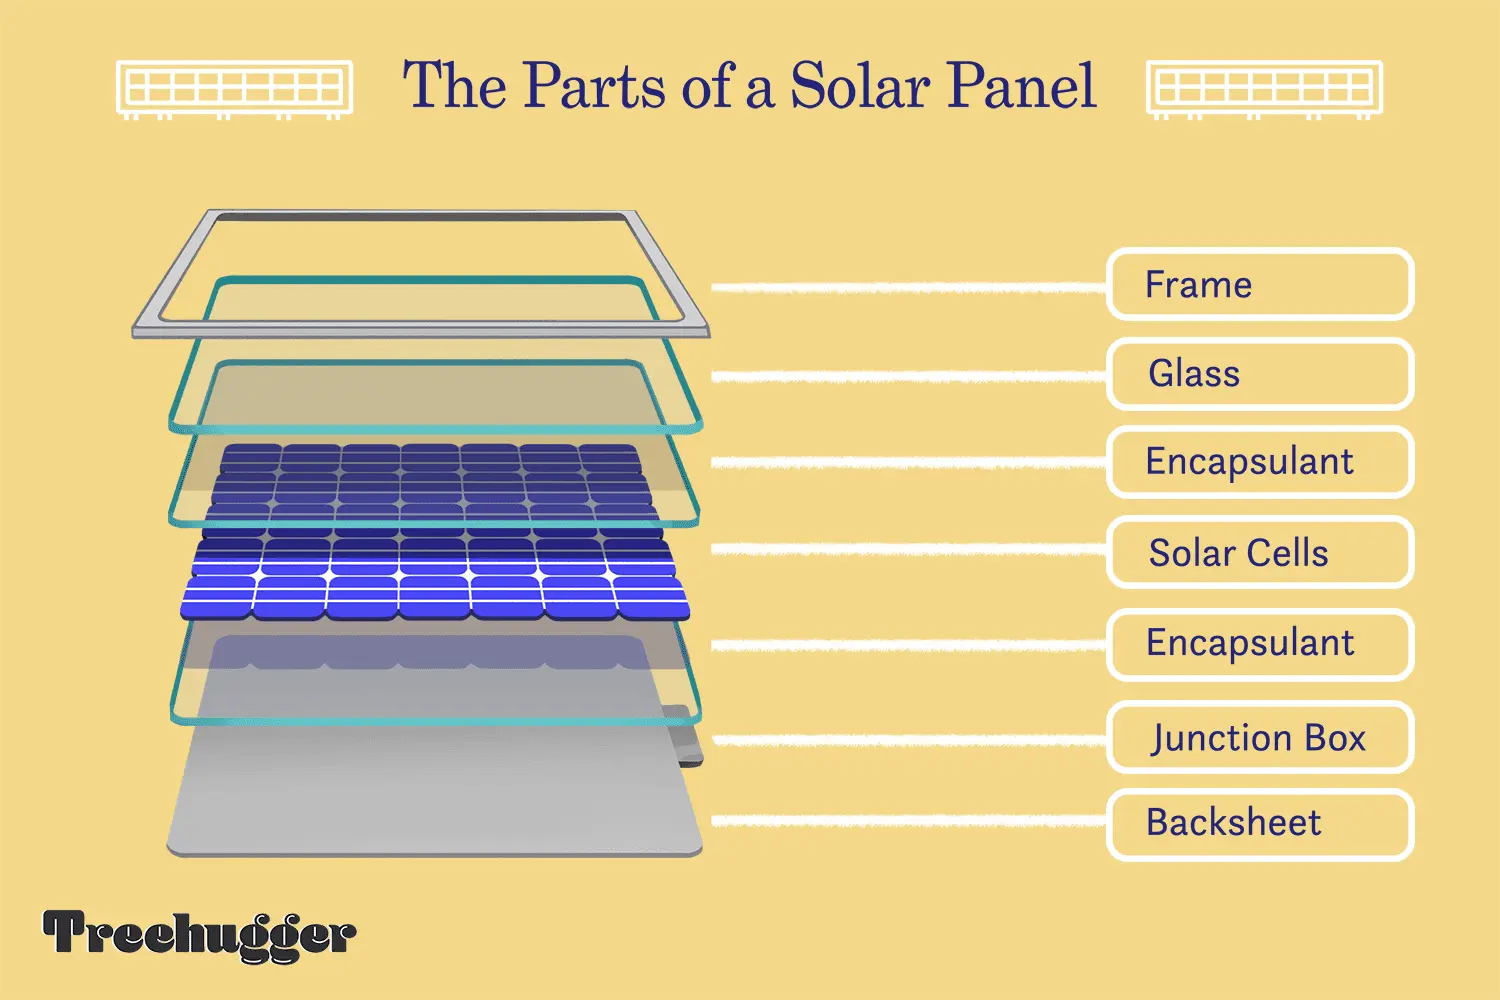 solar energy materials & solar cells - Is Solar Energy Materials and Solar Cells Q1 or q2